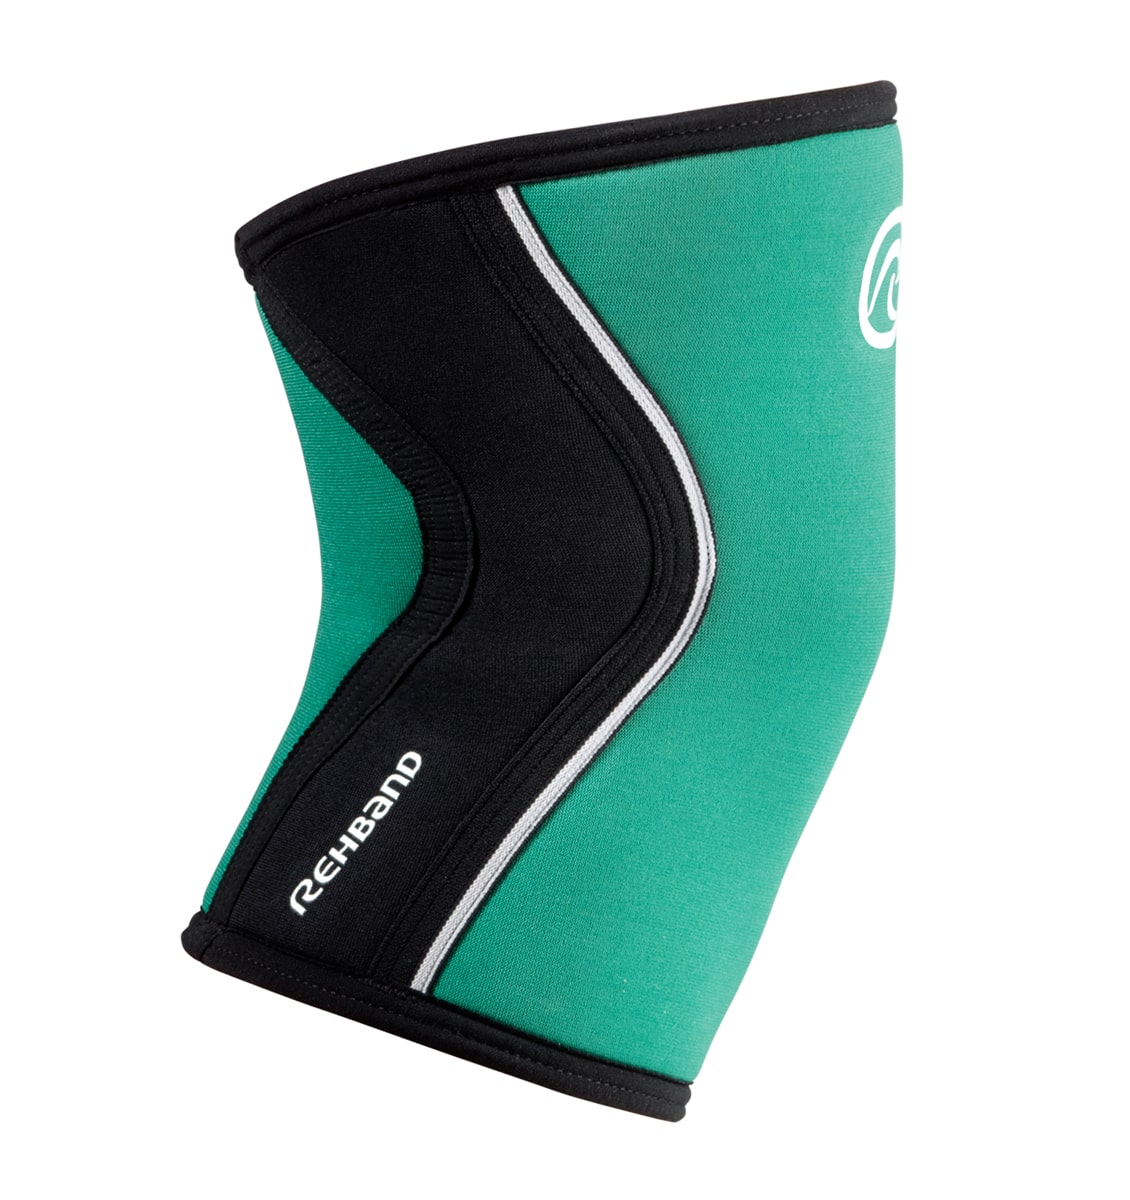 105307-01 - Rehband Rx Knee Sleeve - Green/Black - 5mm - Side